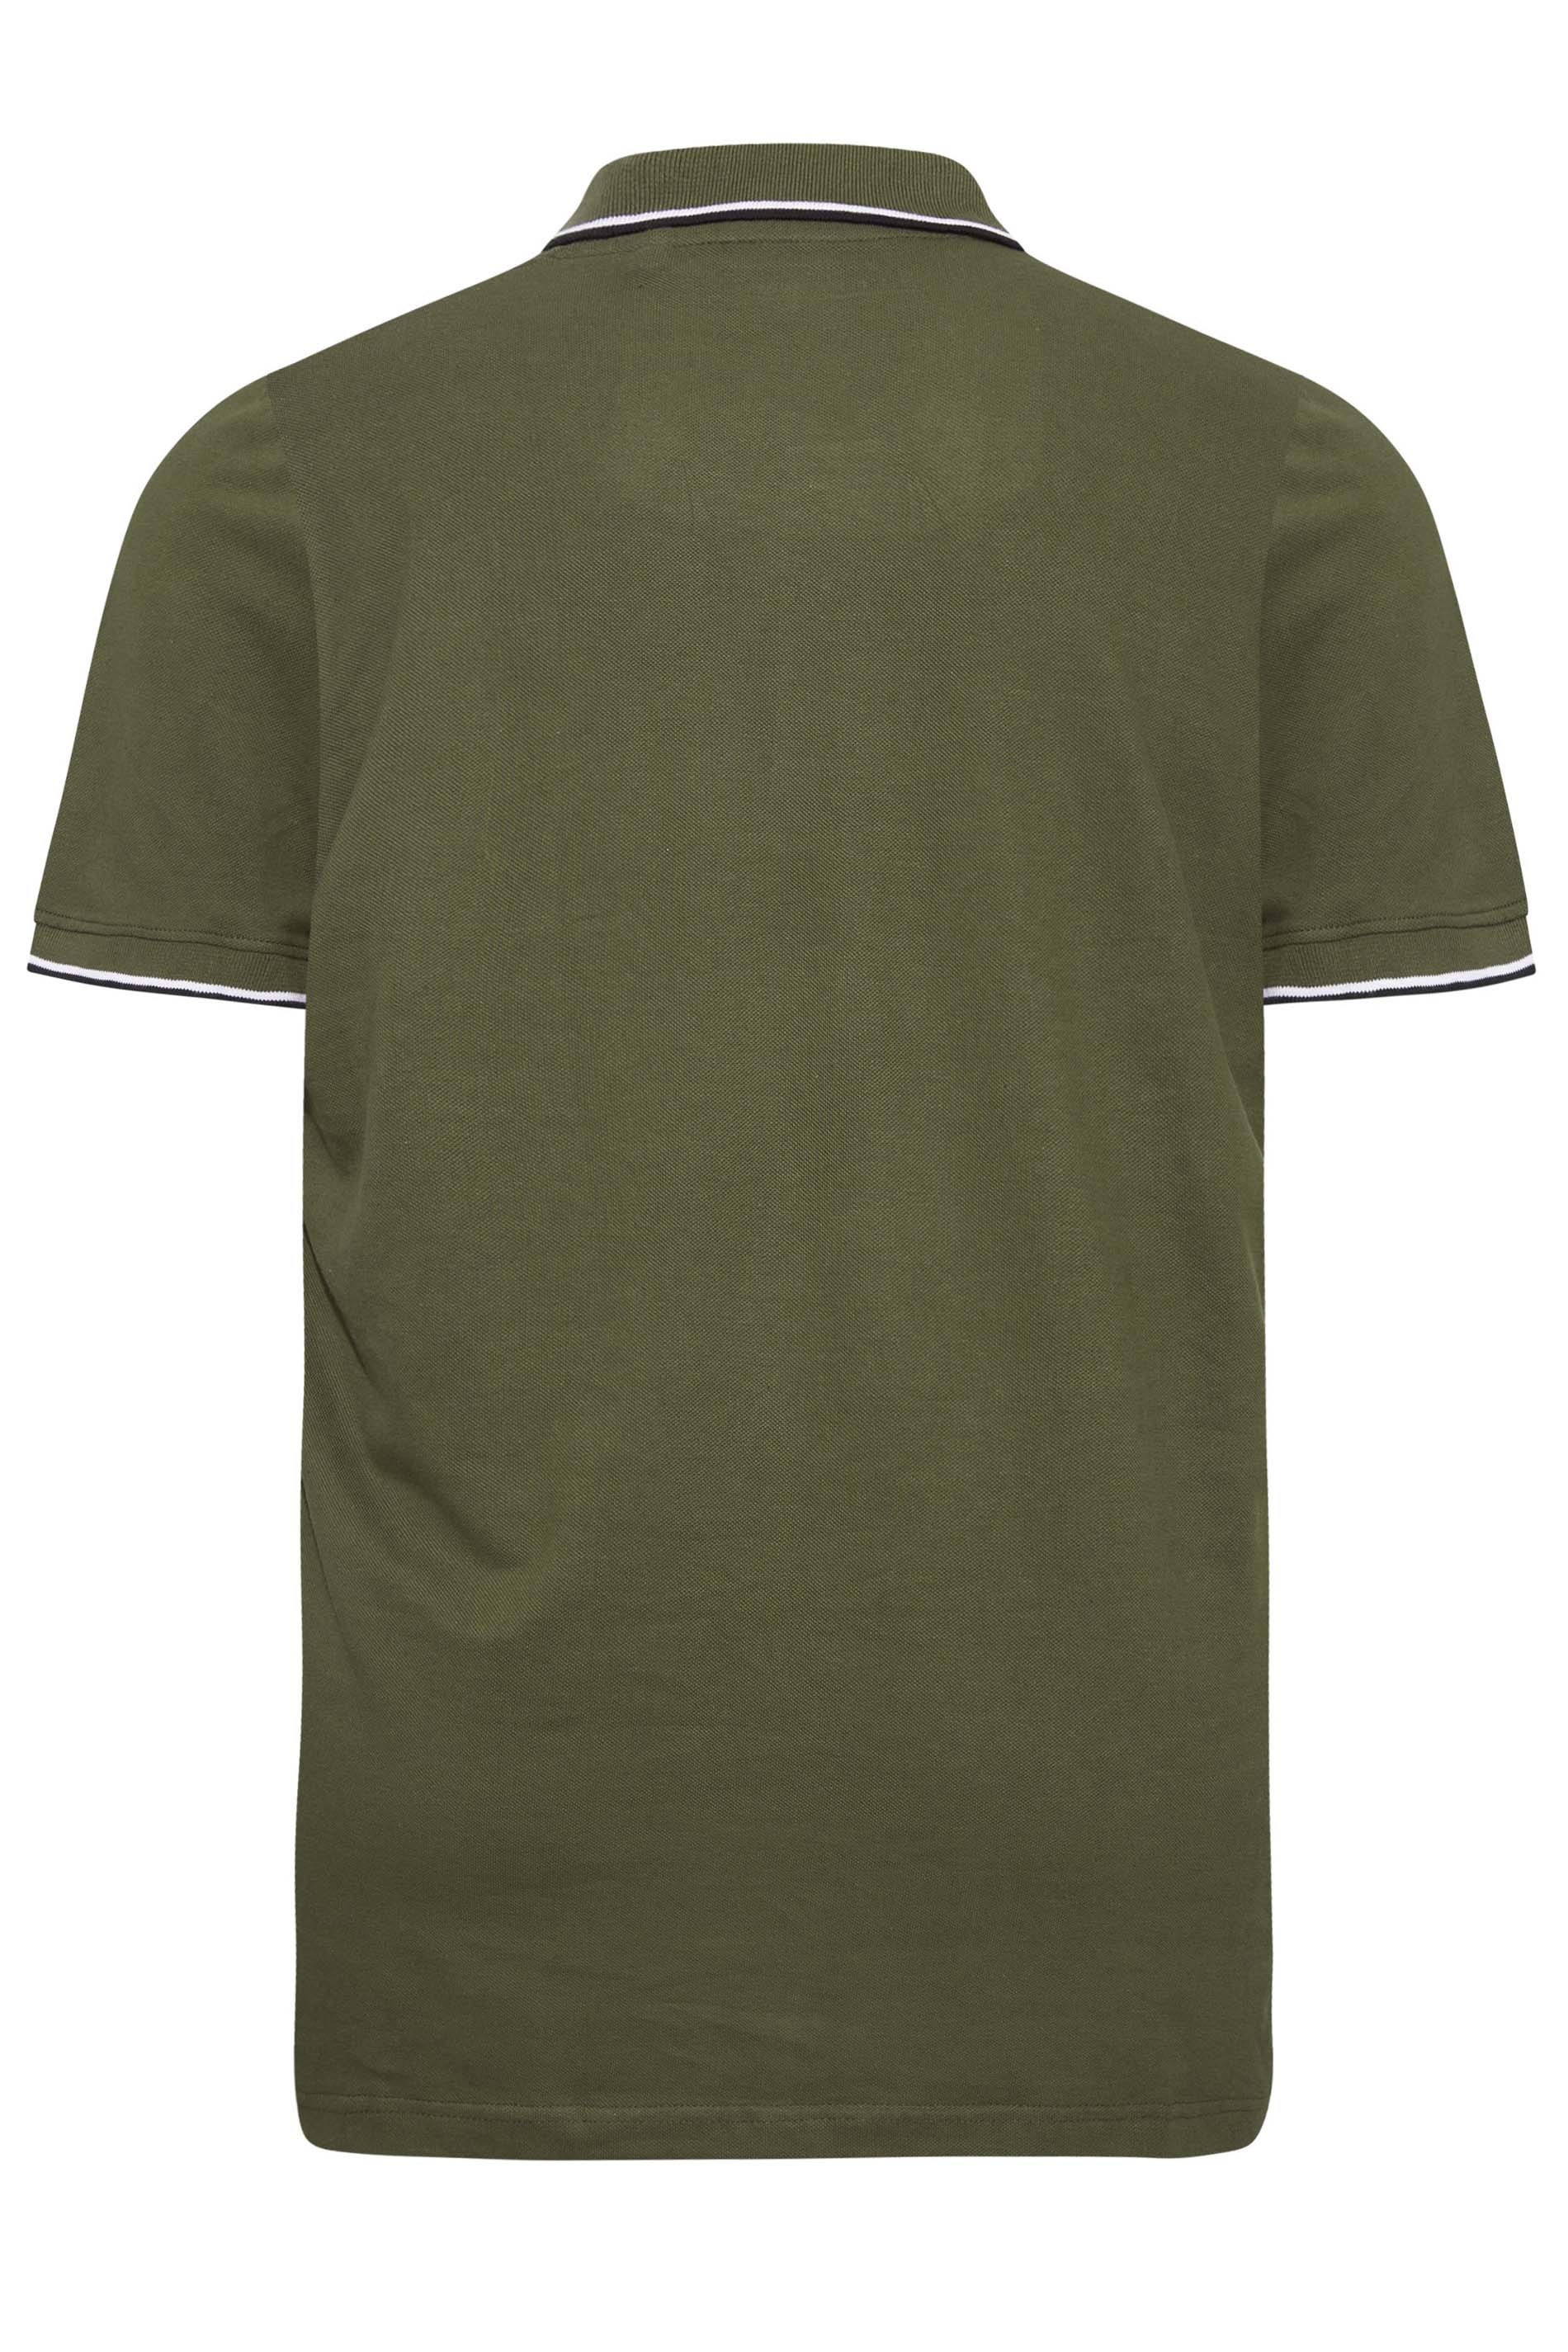 BadRhino Khaki Green Essential Tipped Polo Shirt | BadRhino